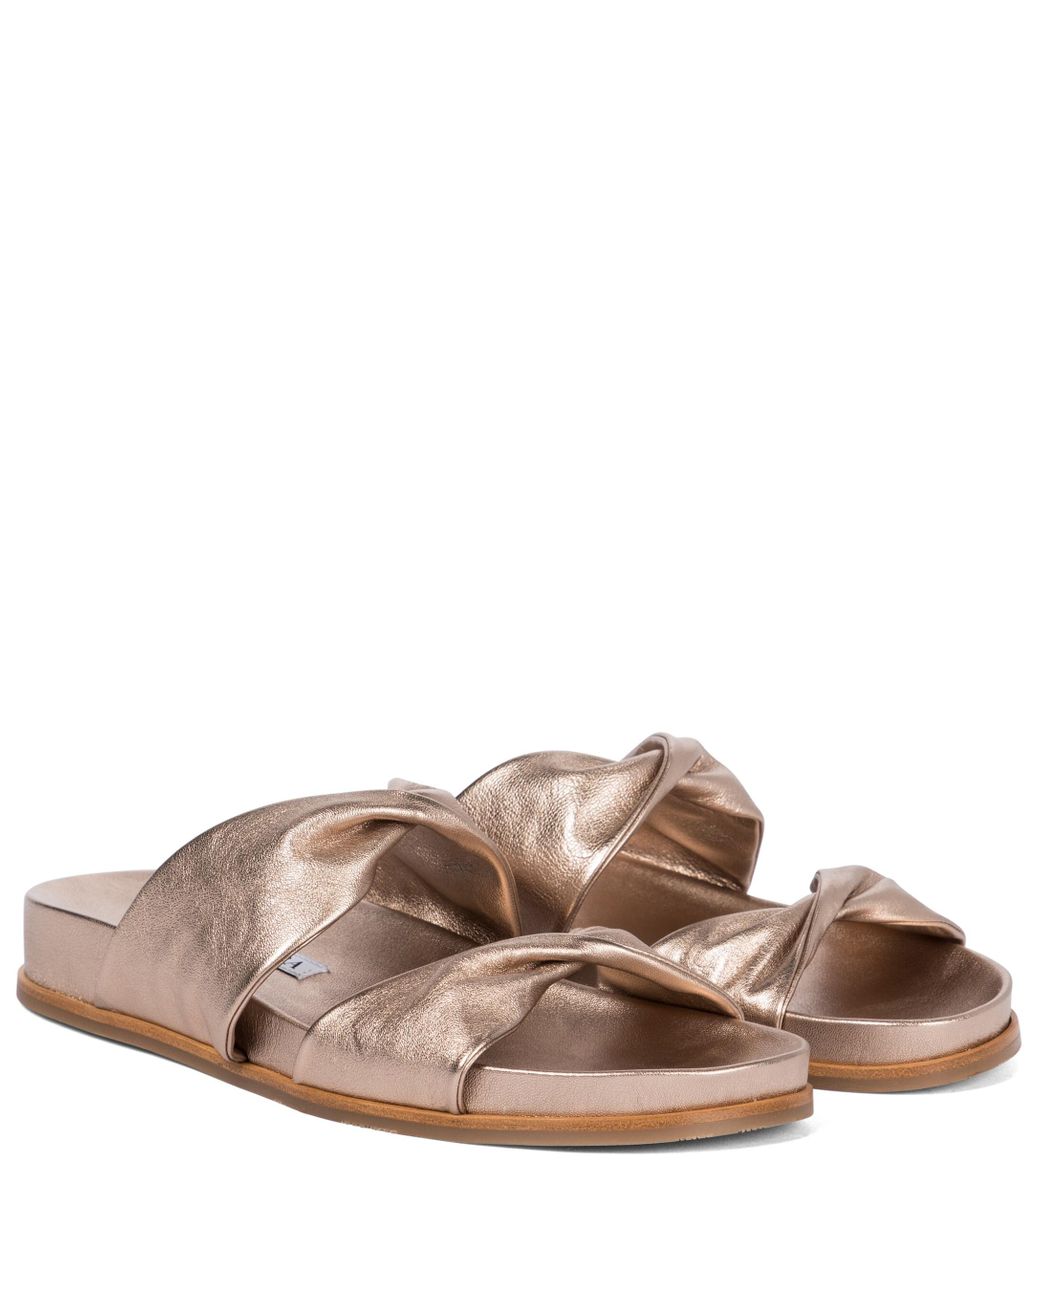 Aquazzura Leather Slides - Brown Sandals, Shoes - AQZ68435